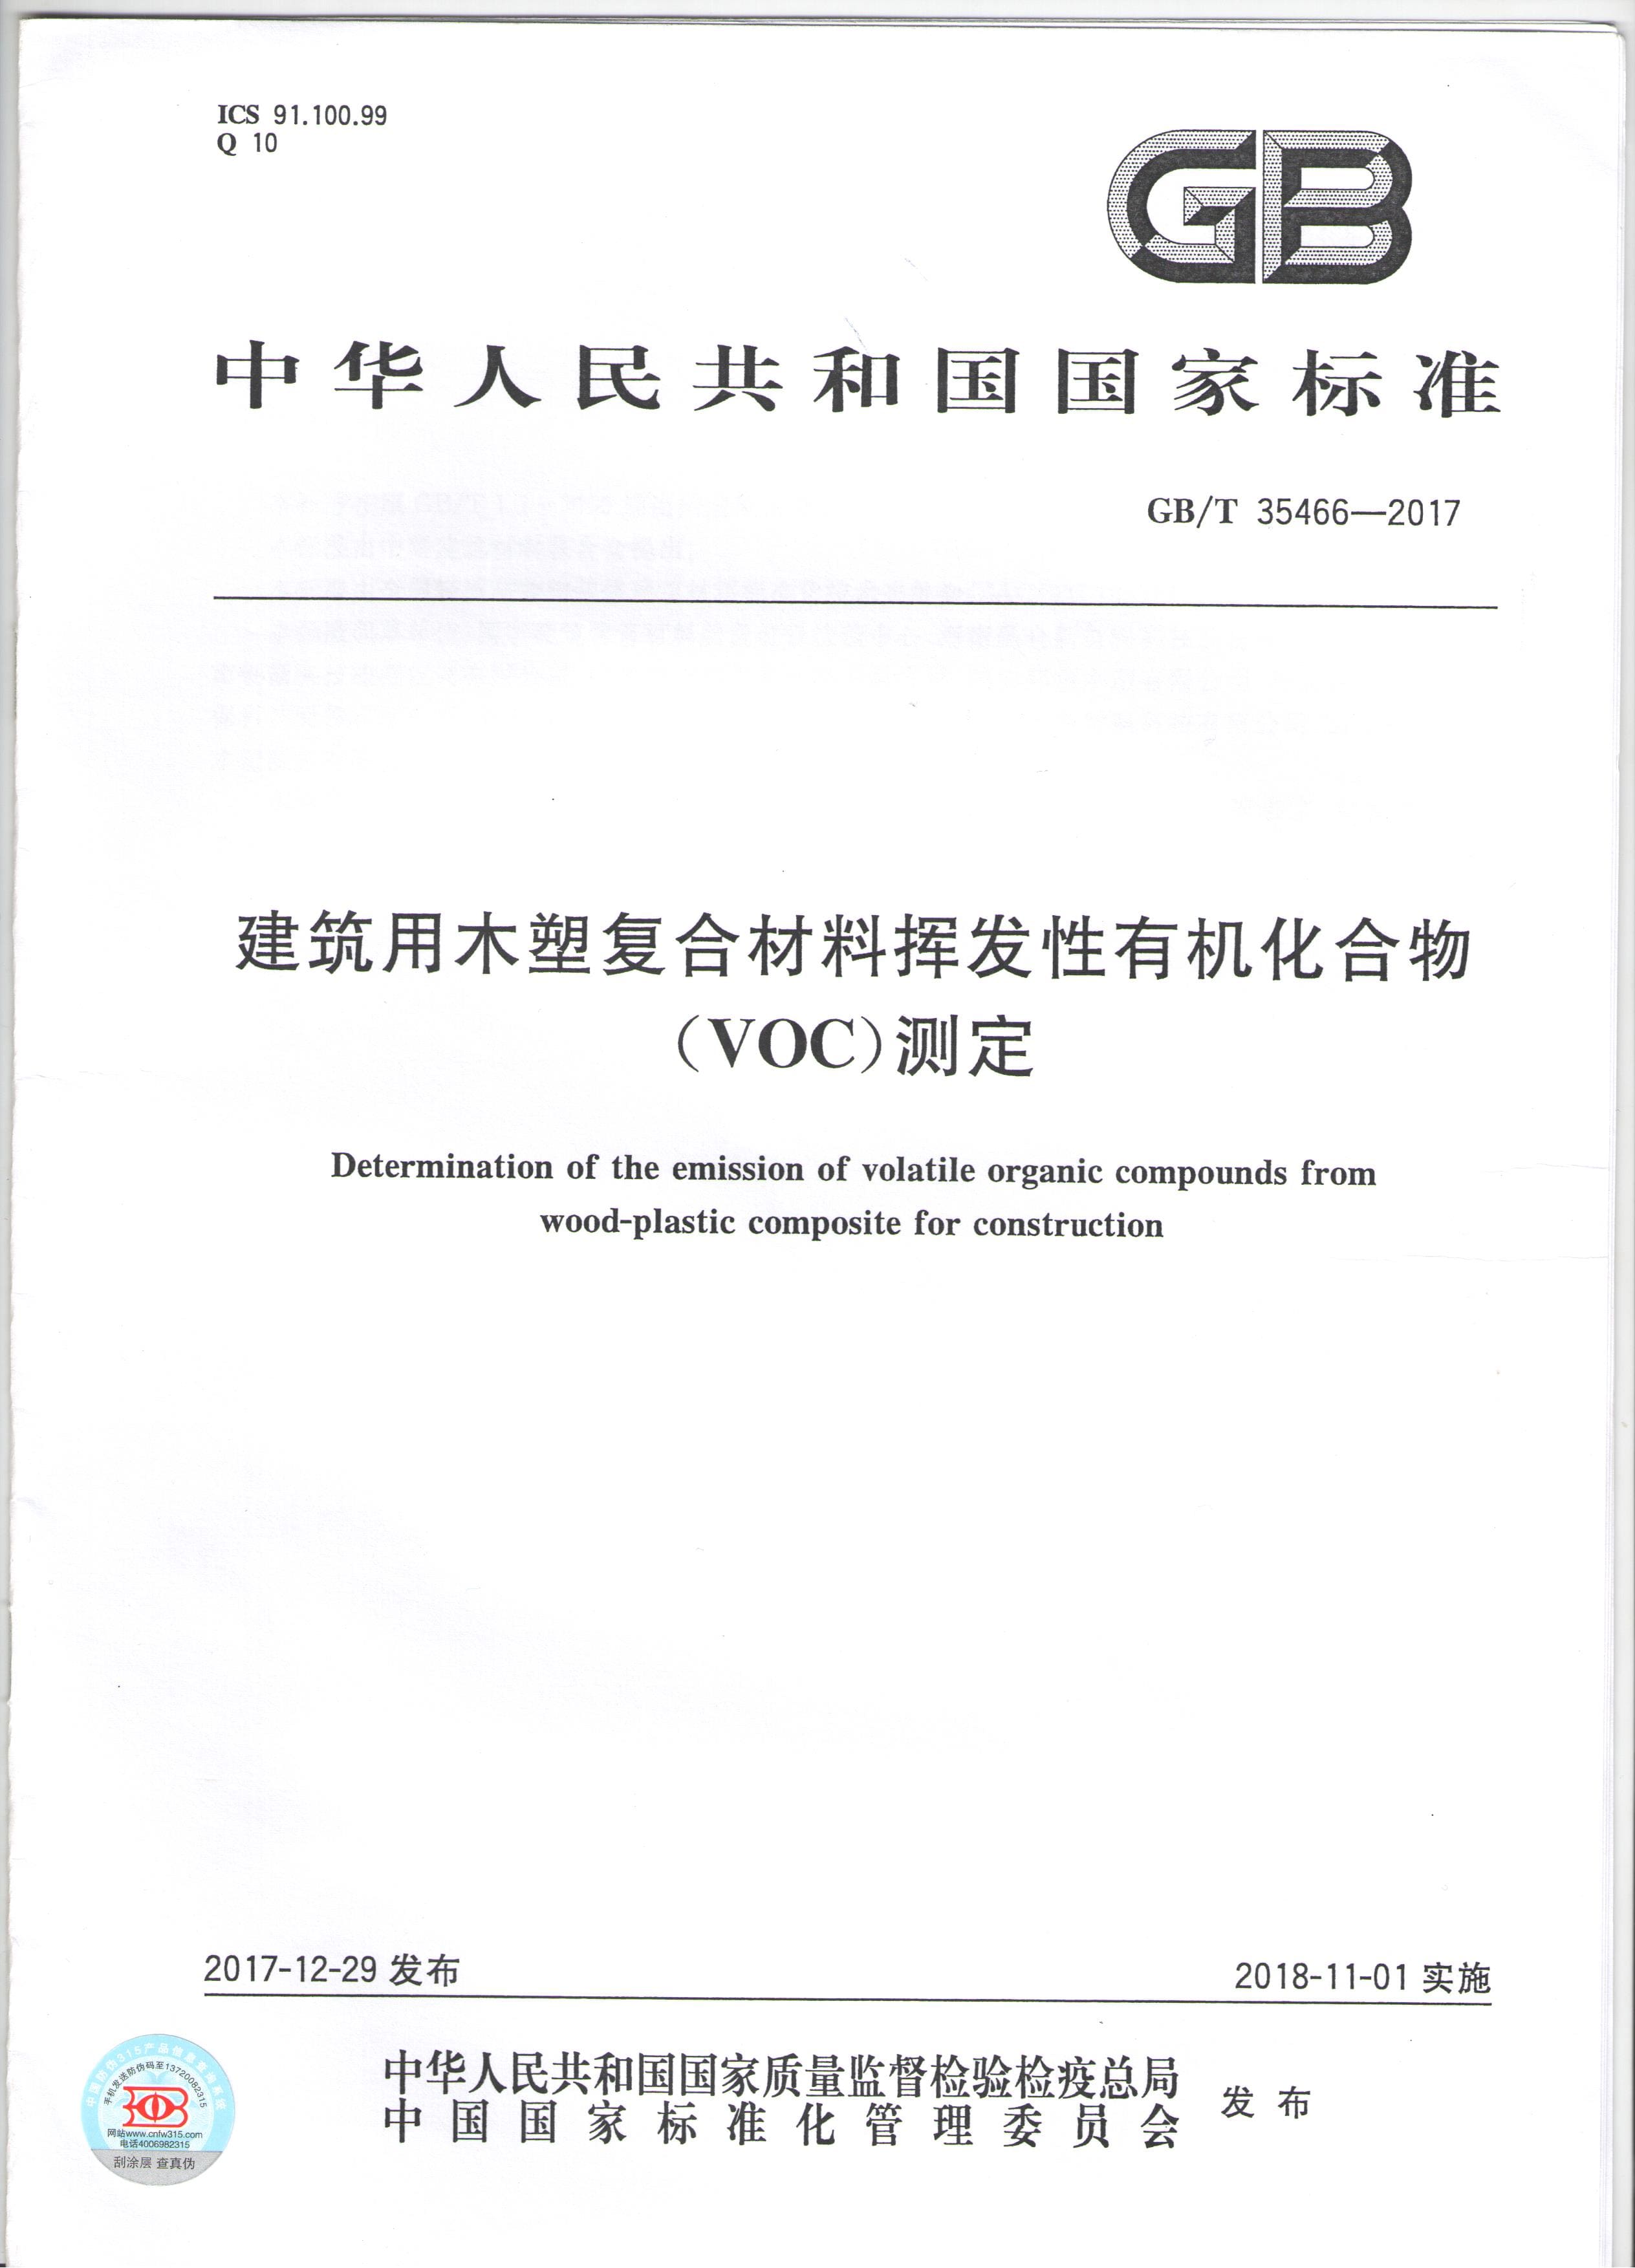 Determination of Volatile Organic Compounds (VOC) for Building Wood Plastic Composites